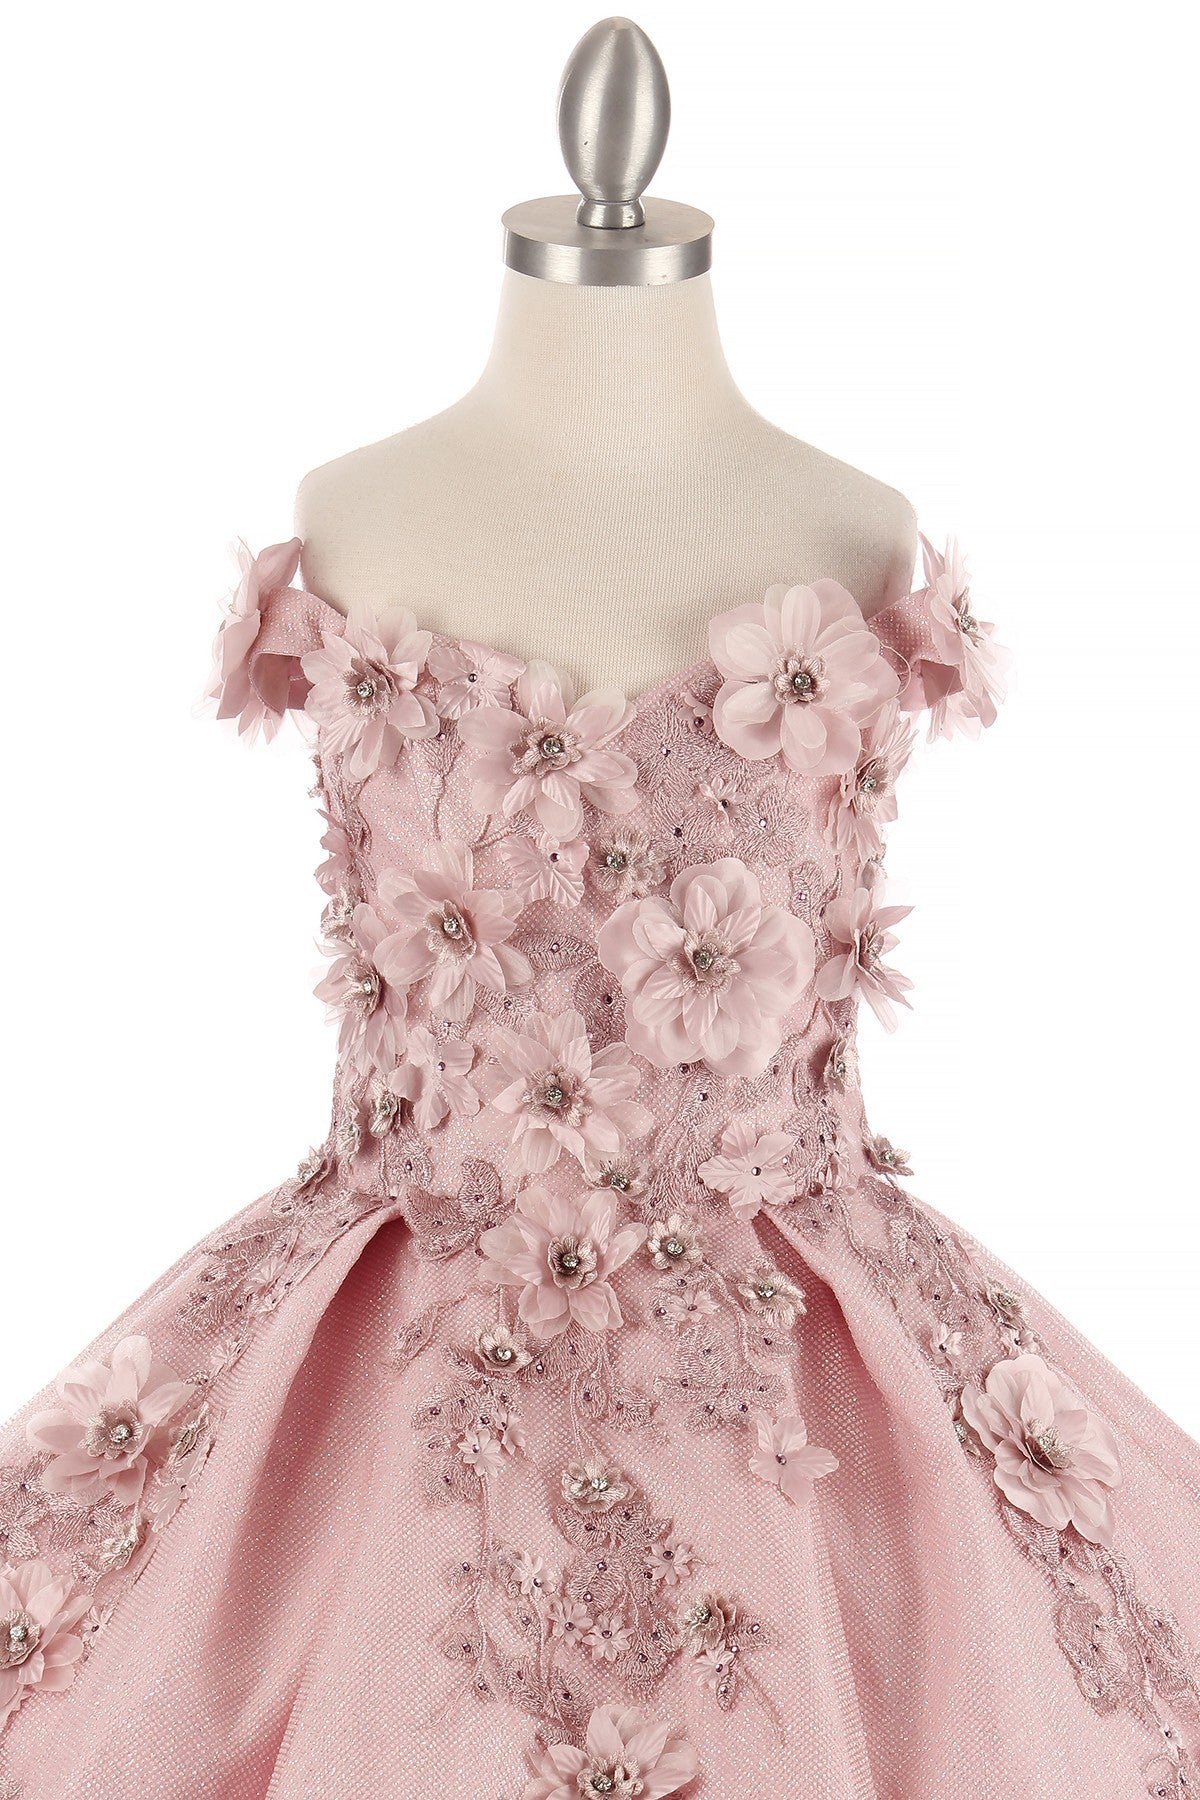 Cinderella Couture USA As8020 Glitter Poly Mini Quince